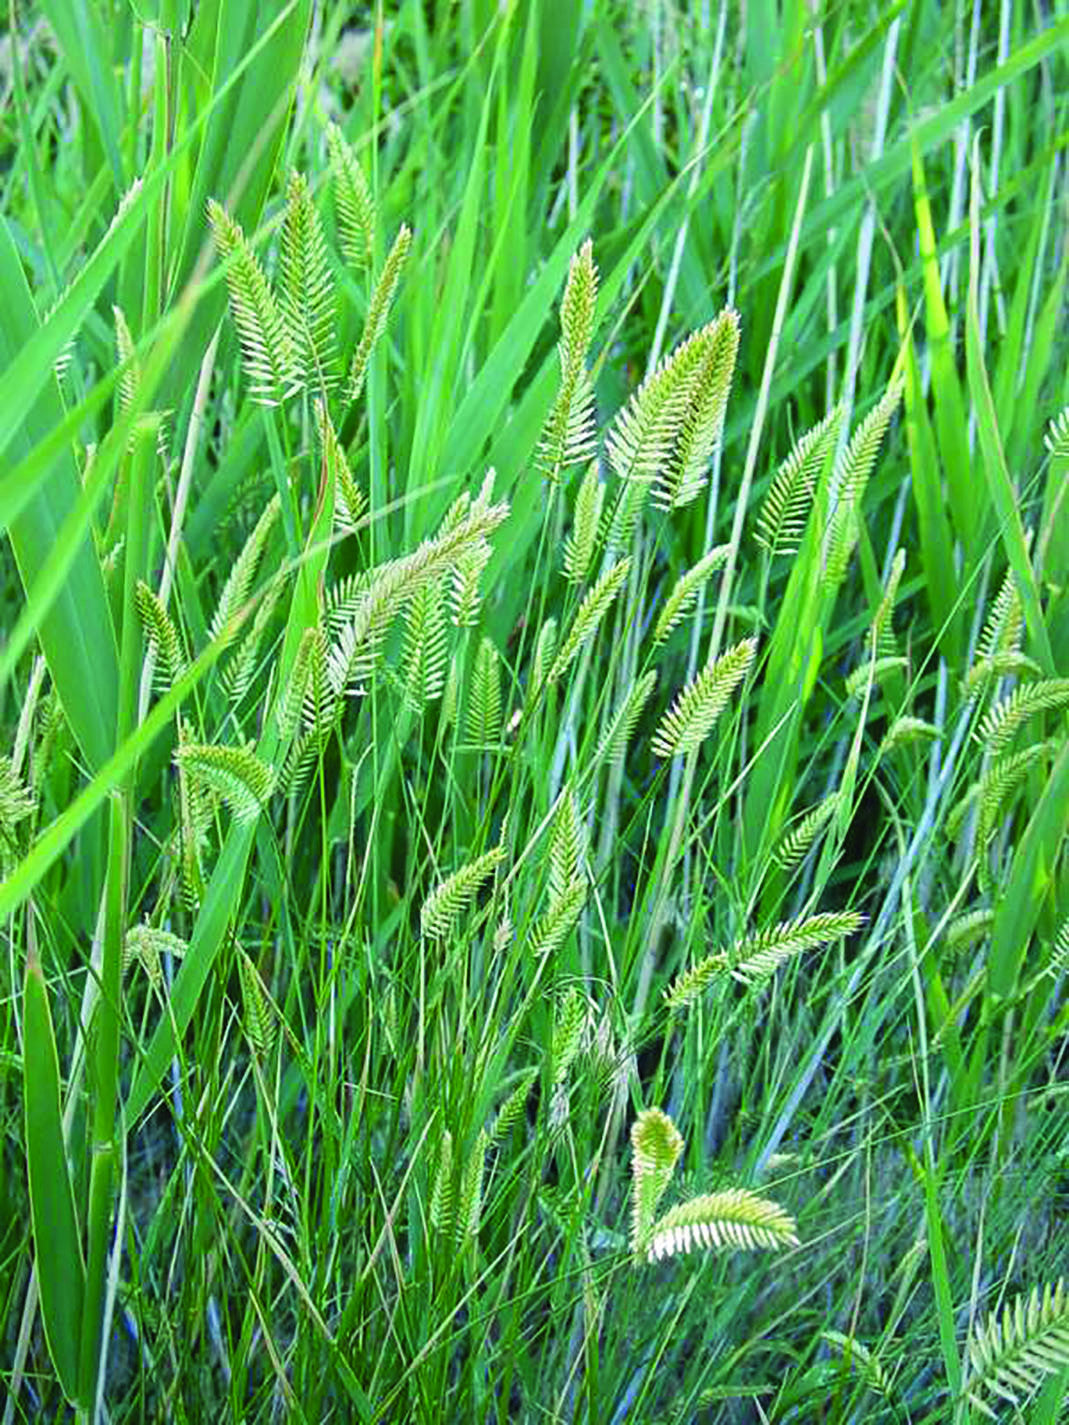 Crested Wheatgrass